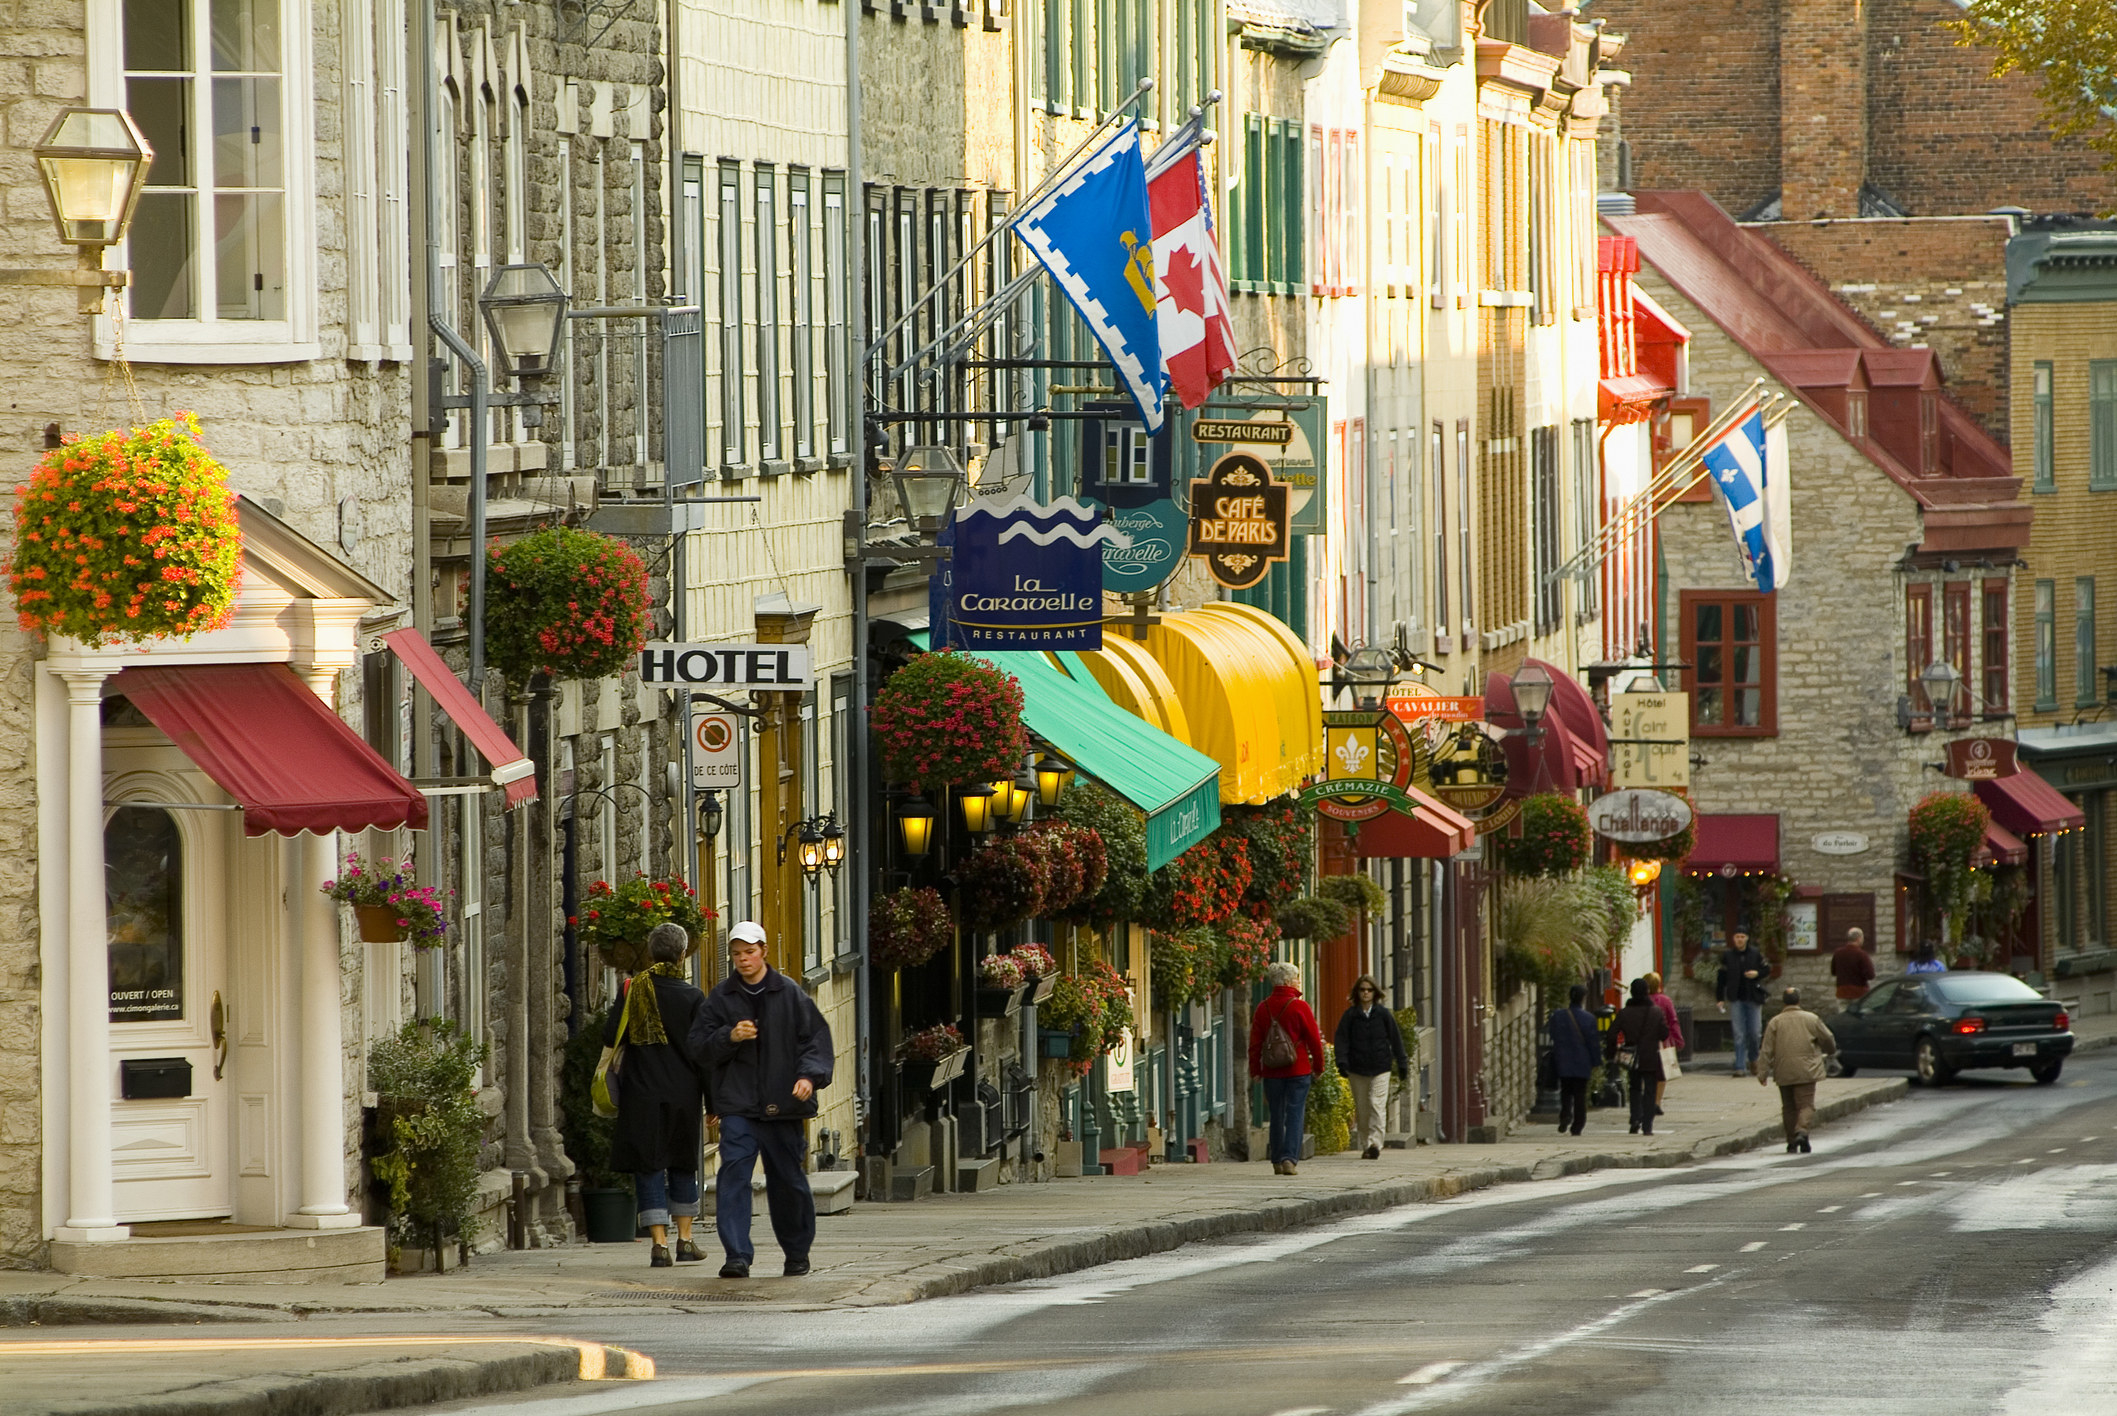 A quaint city street in Canada